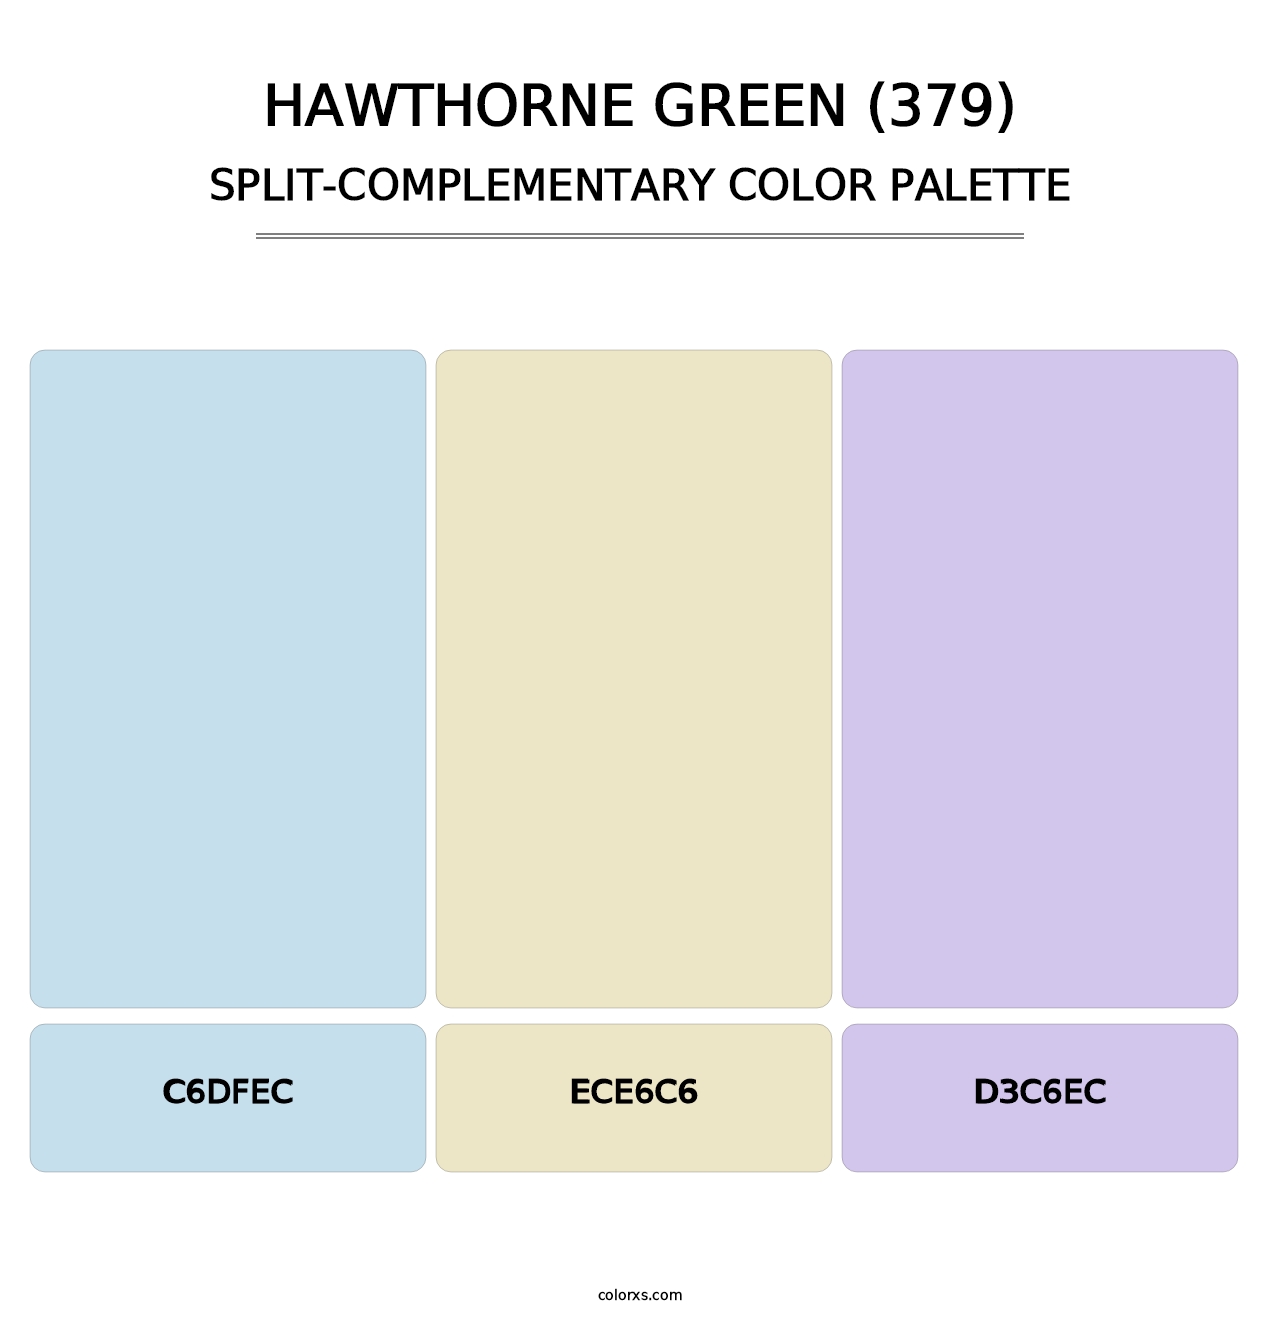 Hawthorne Green (379) - Split-Complementary Color Palette